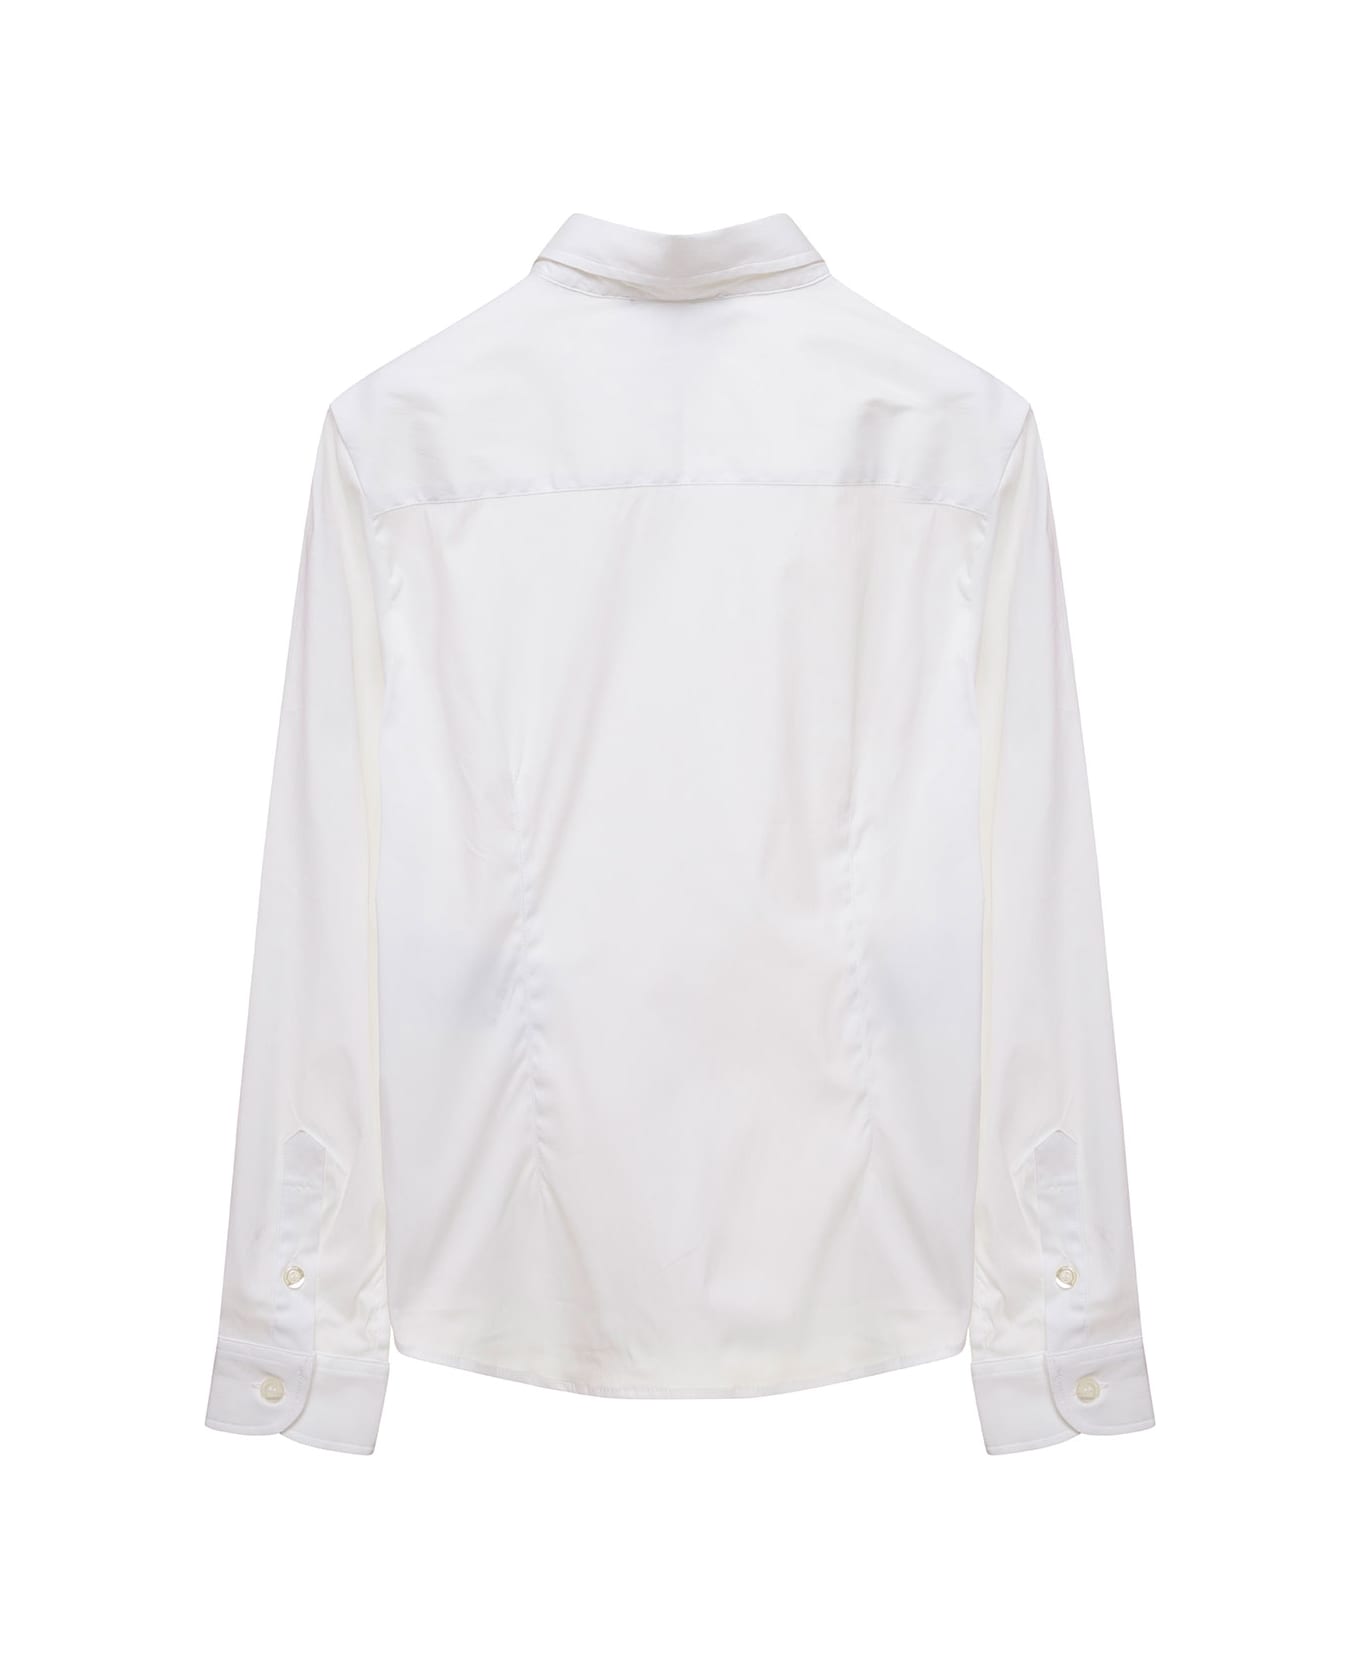 Emporio Armani White Shirt With Tonal Logo Embroidery In Stretch Cotton Blend Boy - White